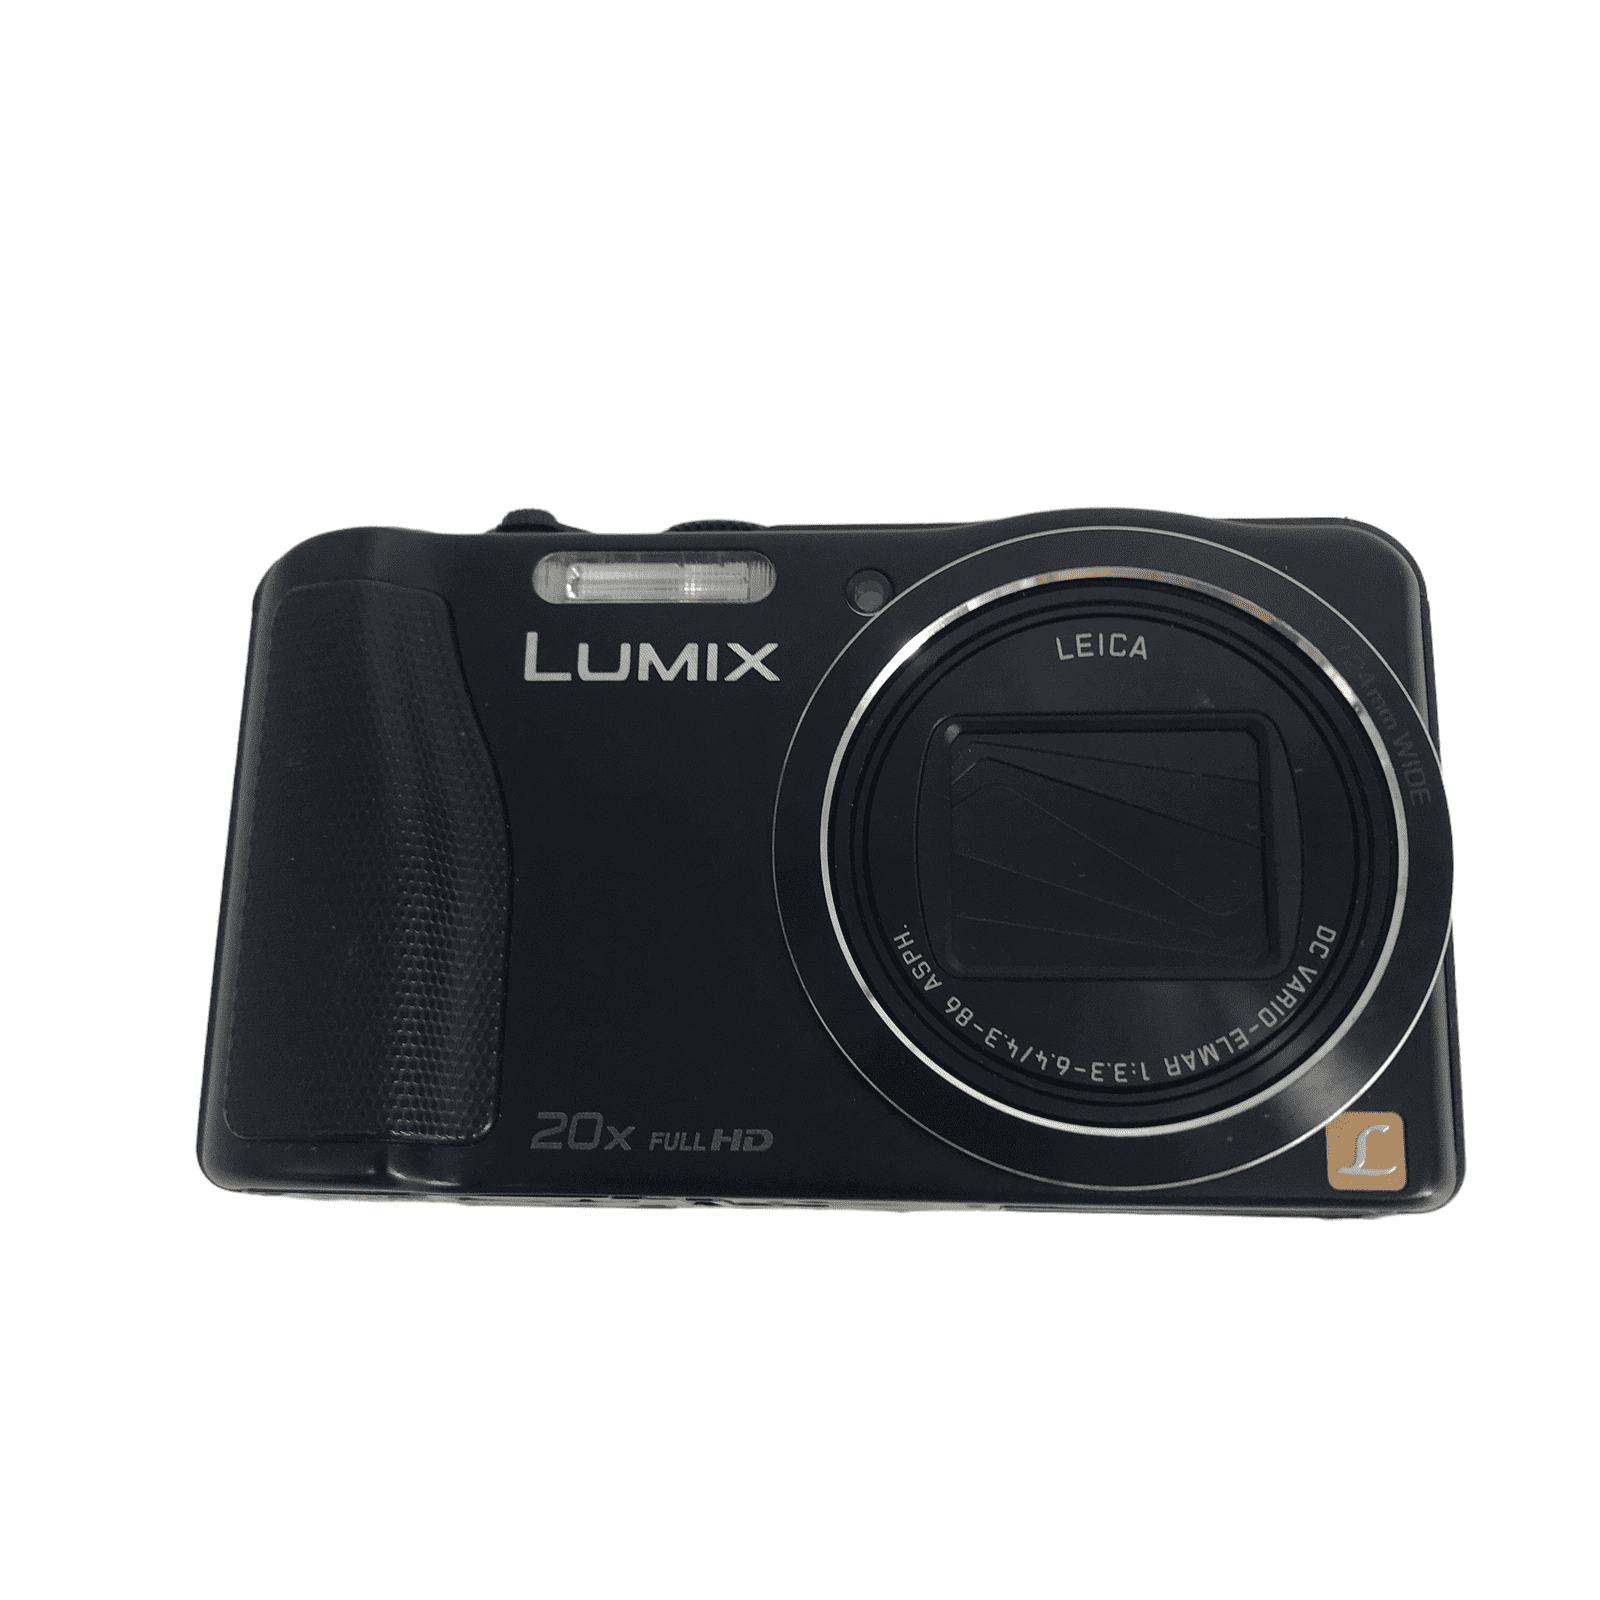 tapijt Bedenken Herkenning Panasonic Digital Camera Lumix DMC-TZ35 20x full HD - Black #UMP6589 Used -  Walmart.com